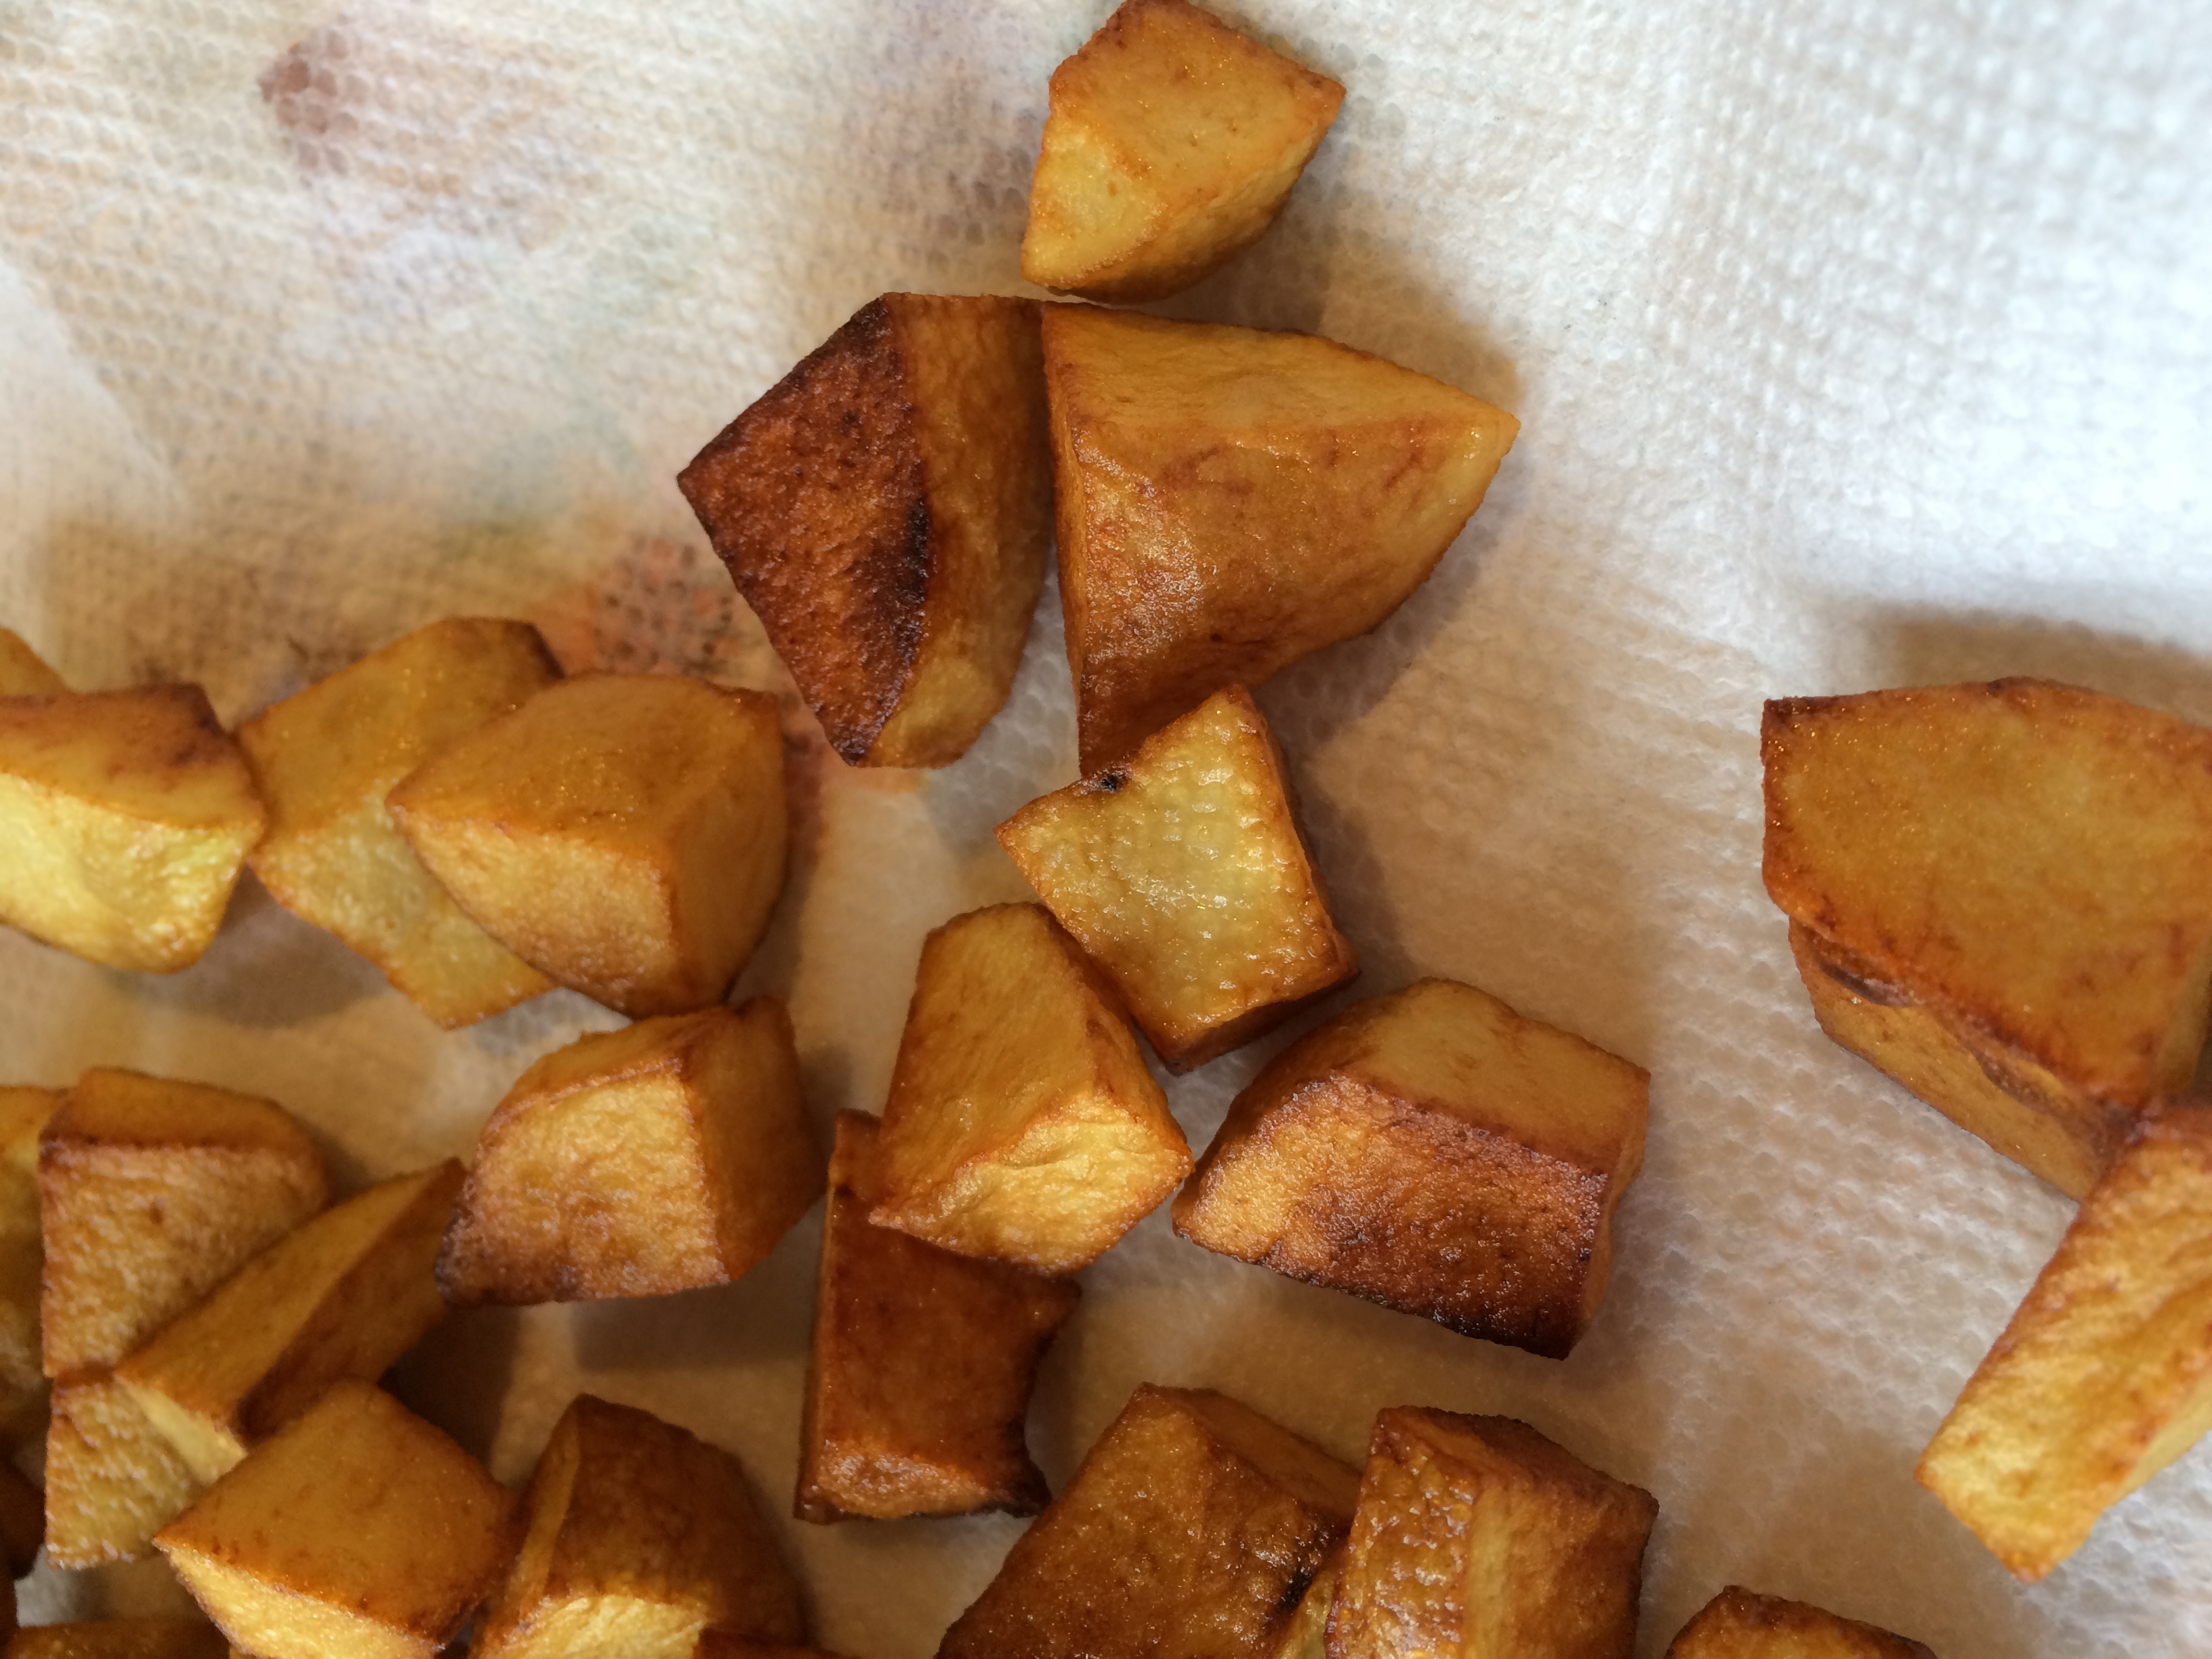 Fried potato cubes on a paper towel